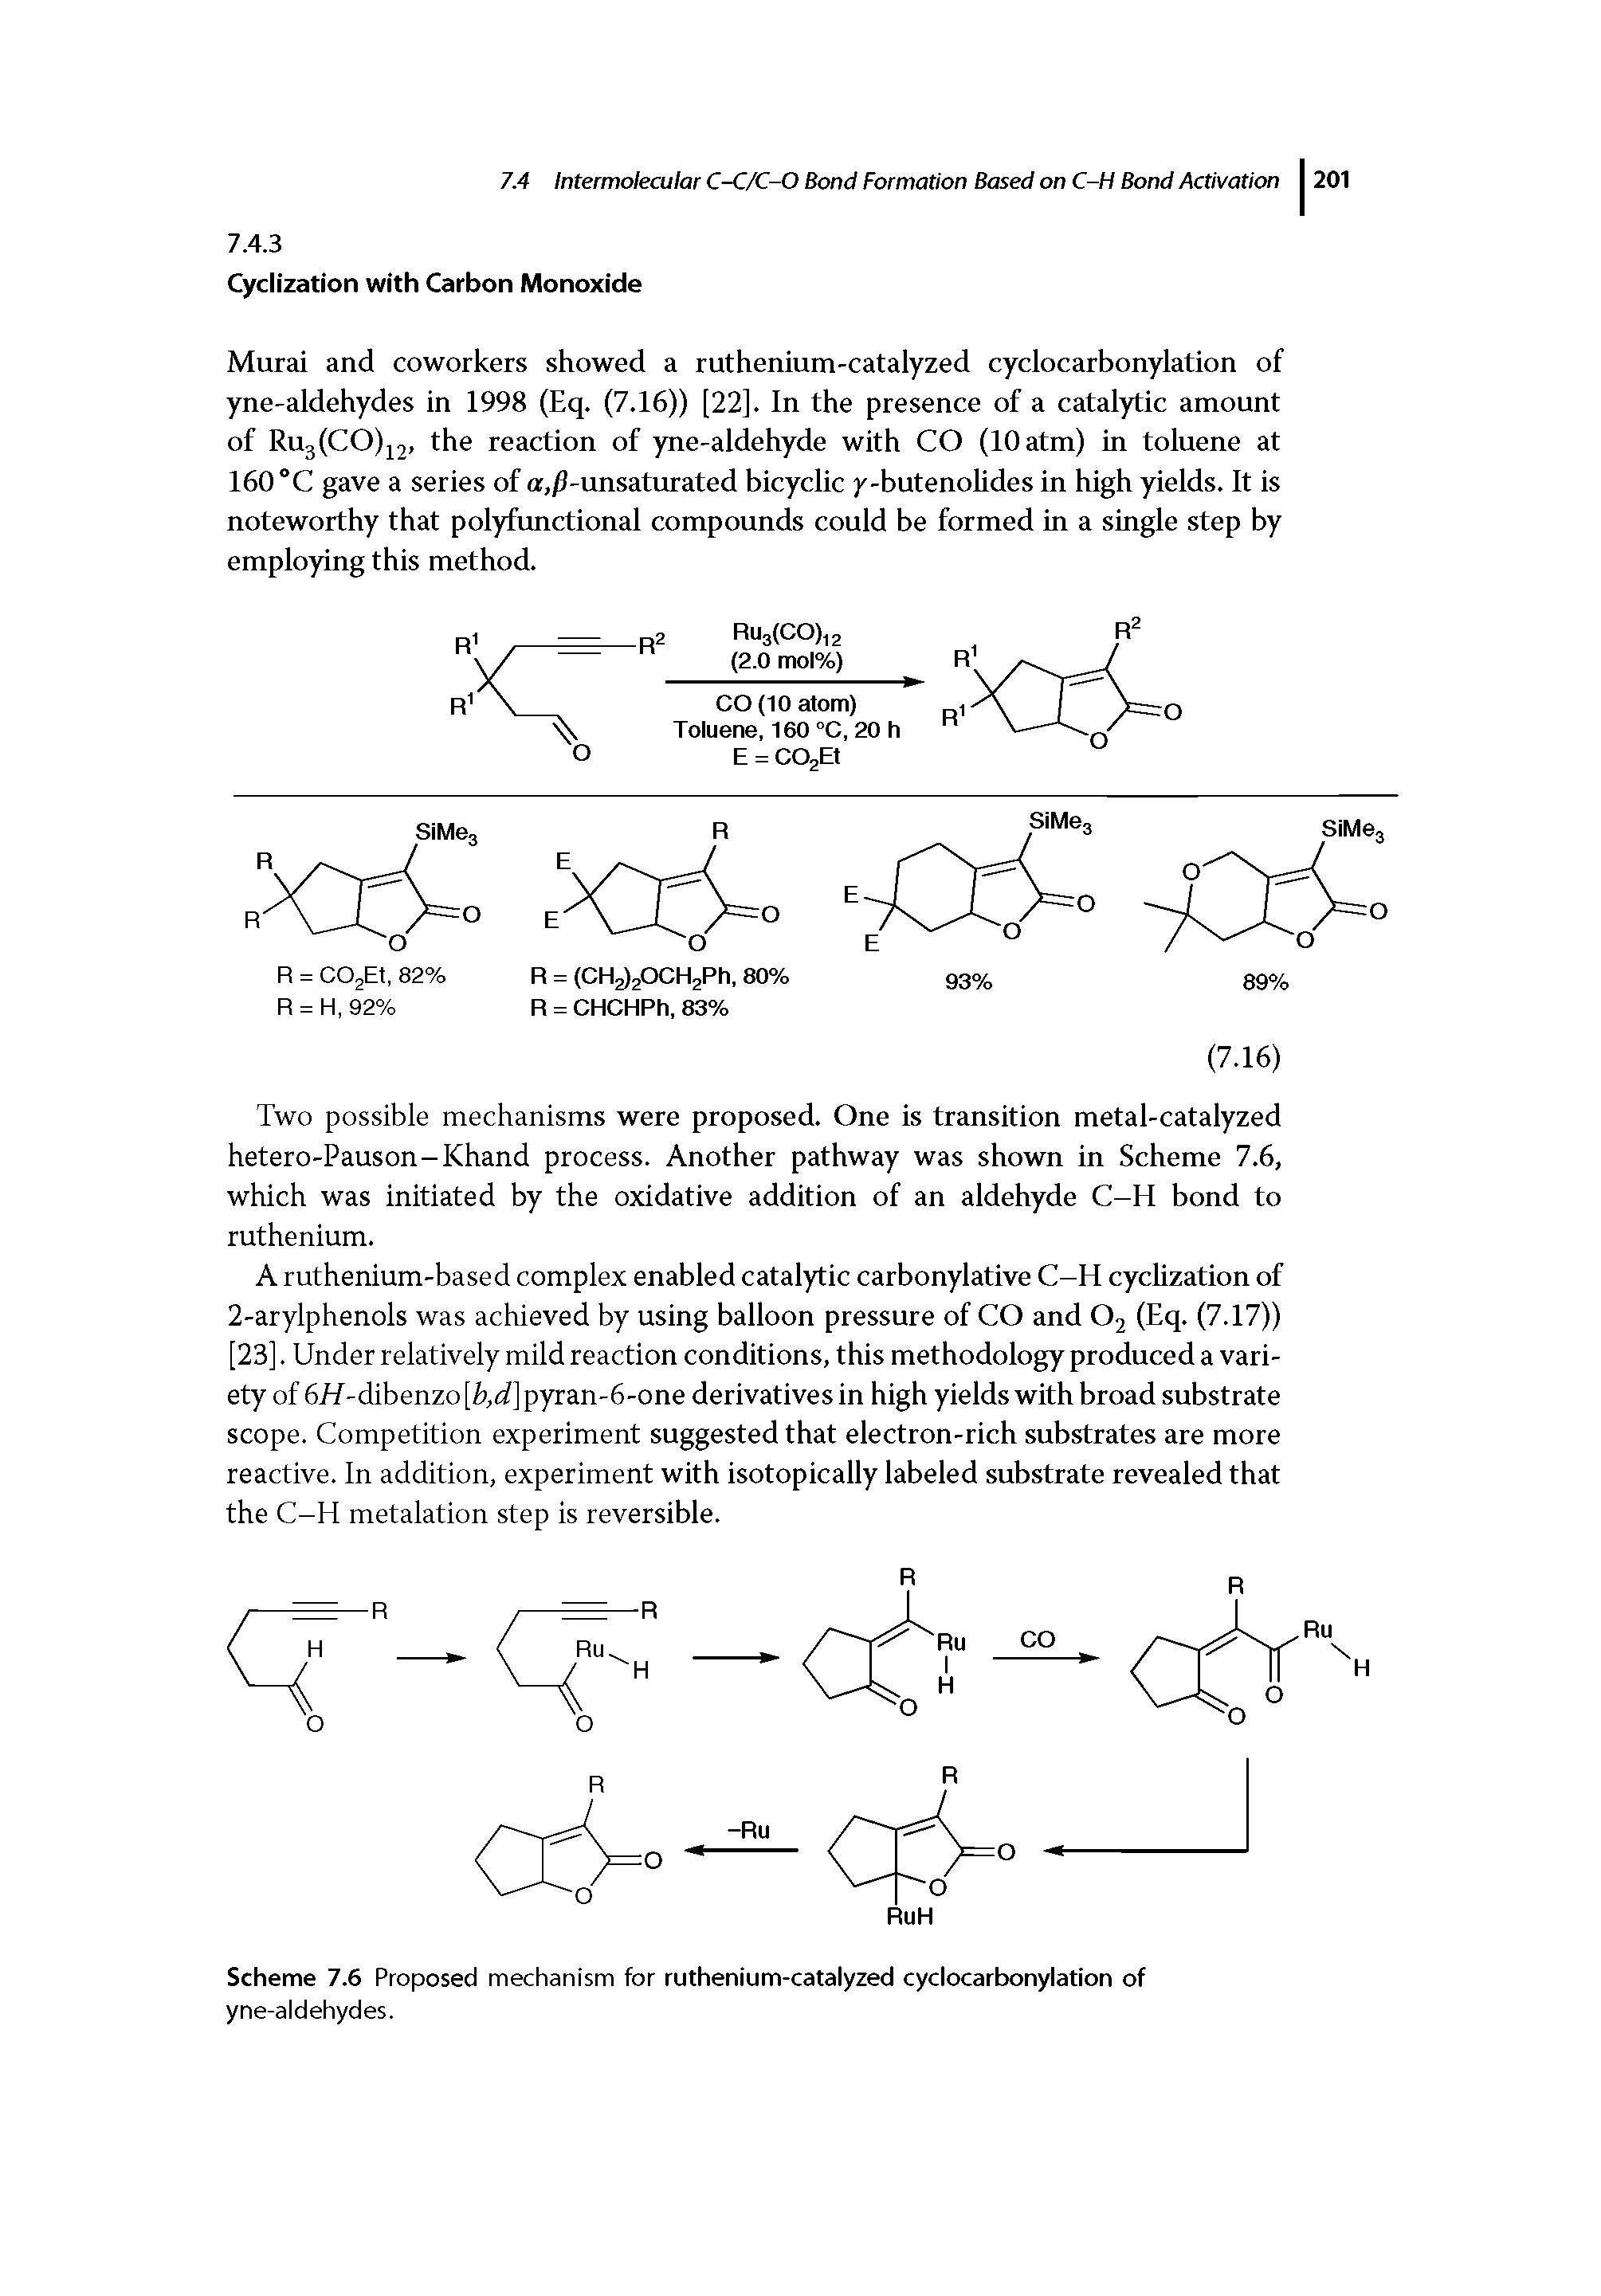 Scheme 7.6 Proposed mechanism for ruthenium-catalyzed cyclocarbonylation of yne-aldehydes.